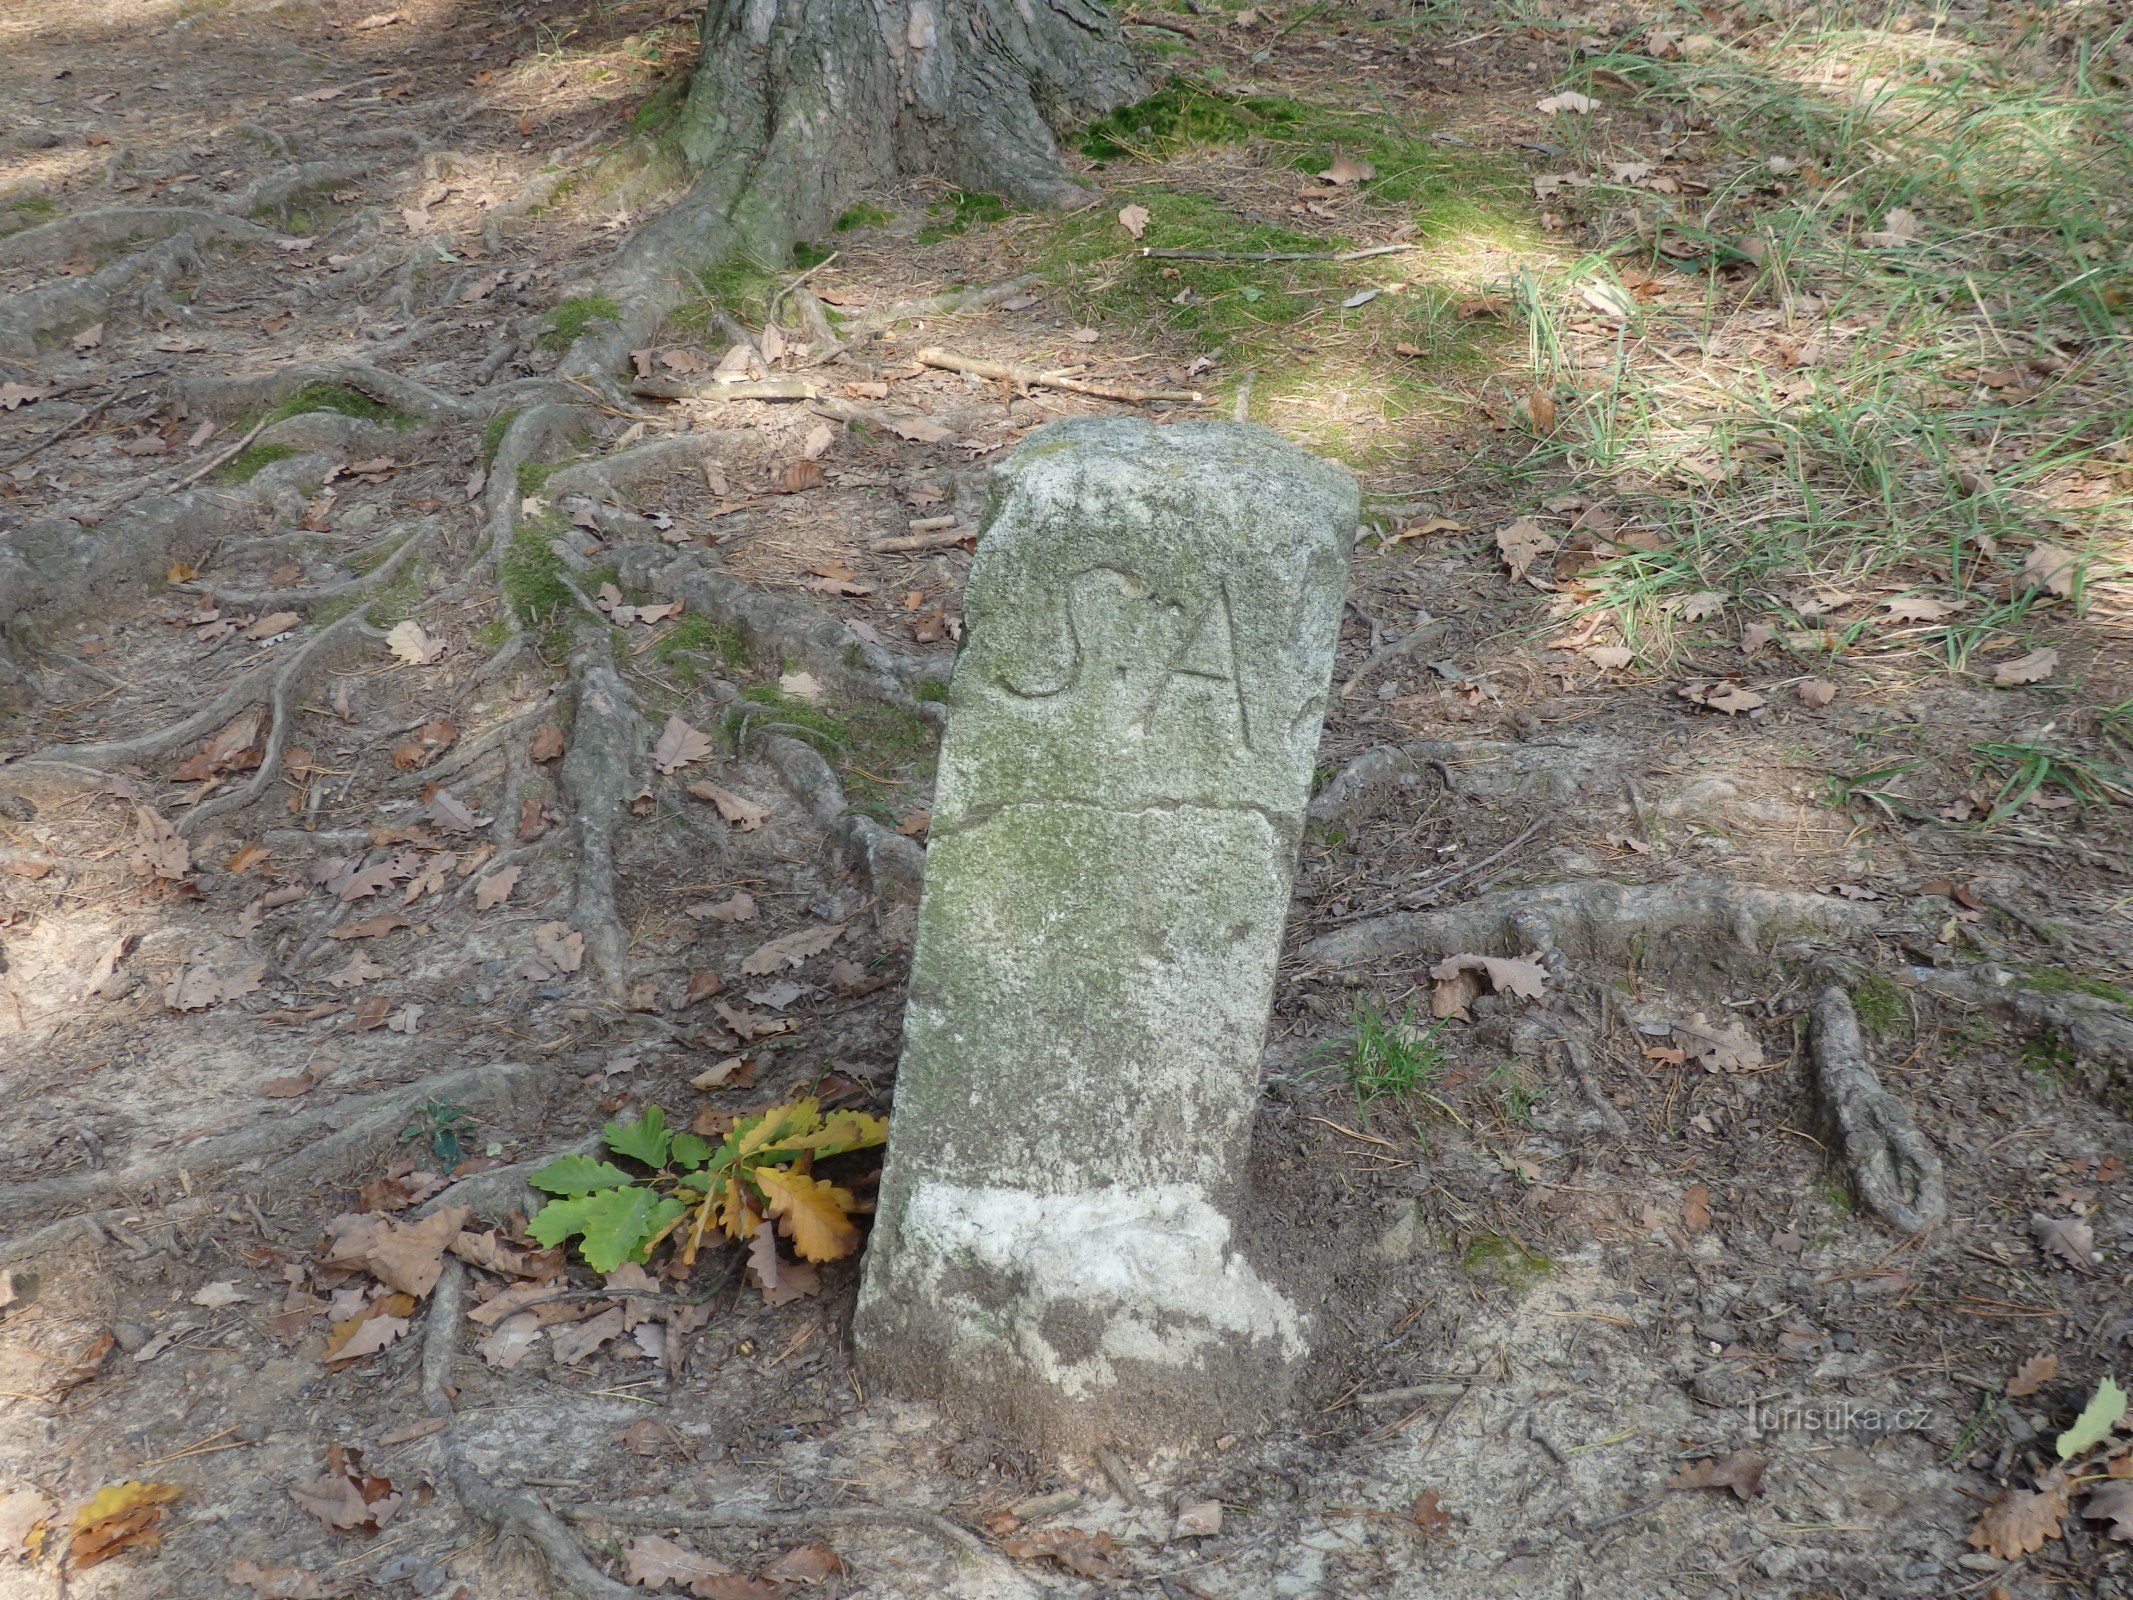 Boundary stone in the Holedná nature reserve